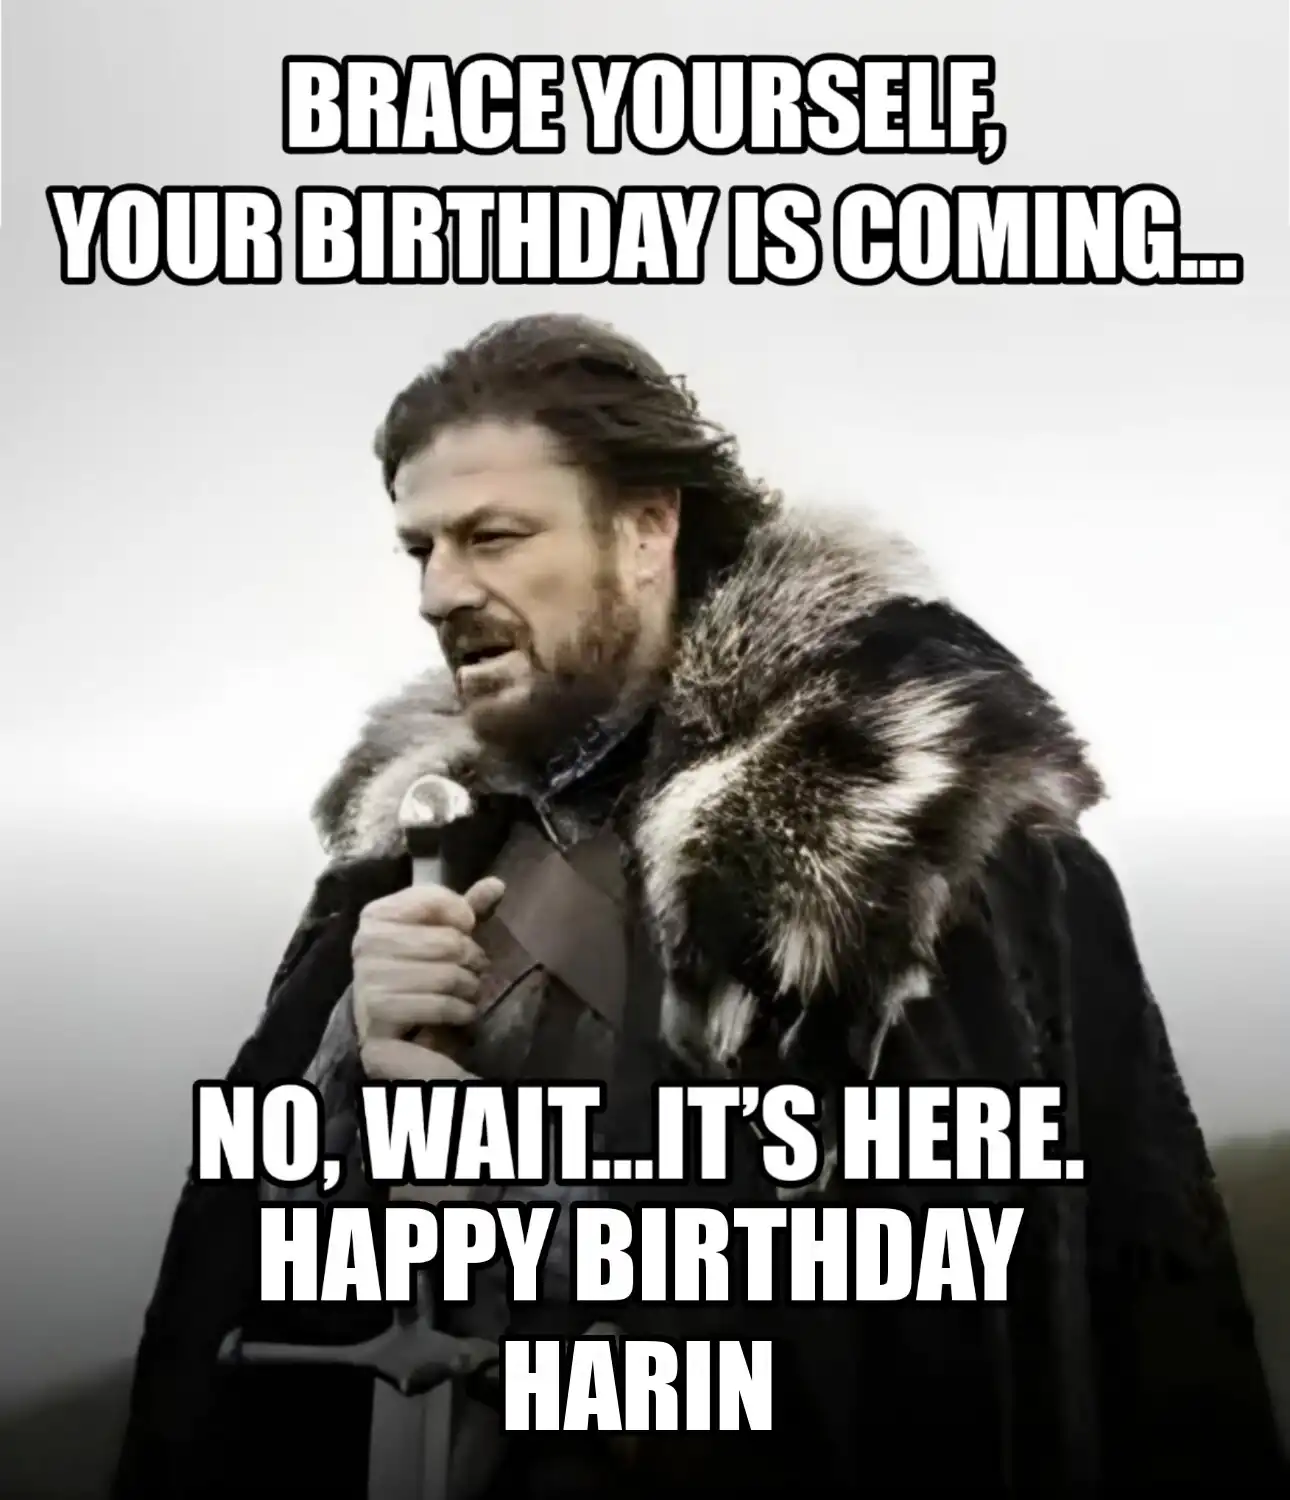 Happy Birthday Harin Brace Yourself Your Birthday Is Coming Meme